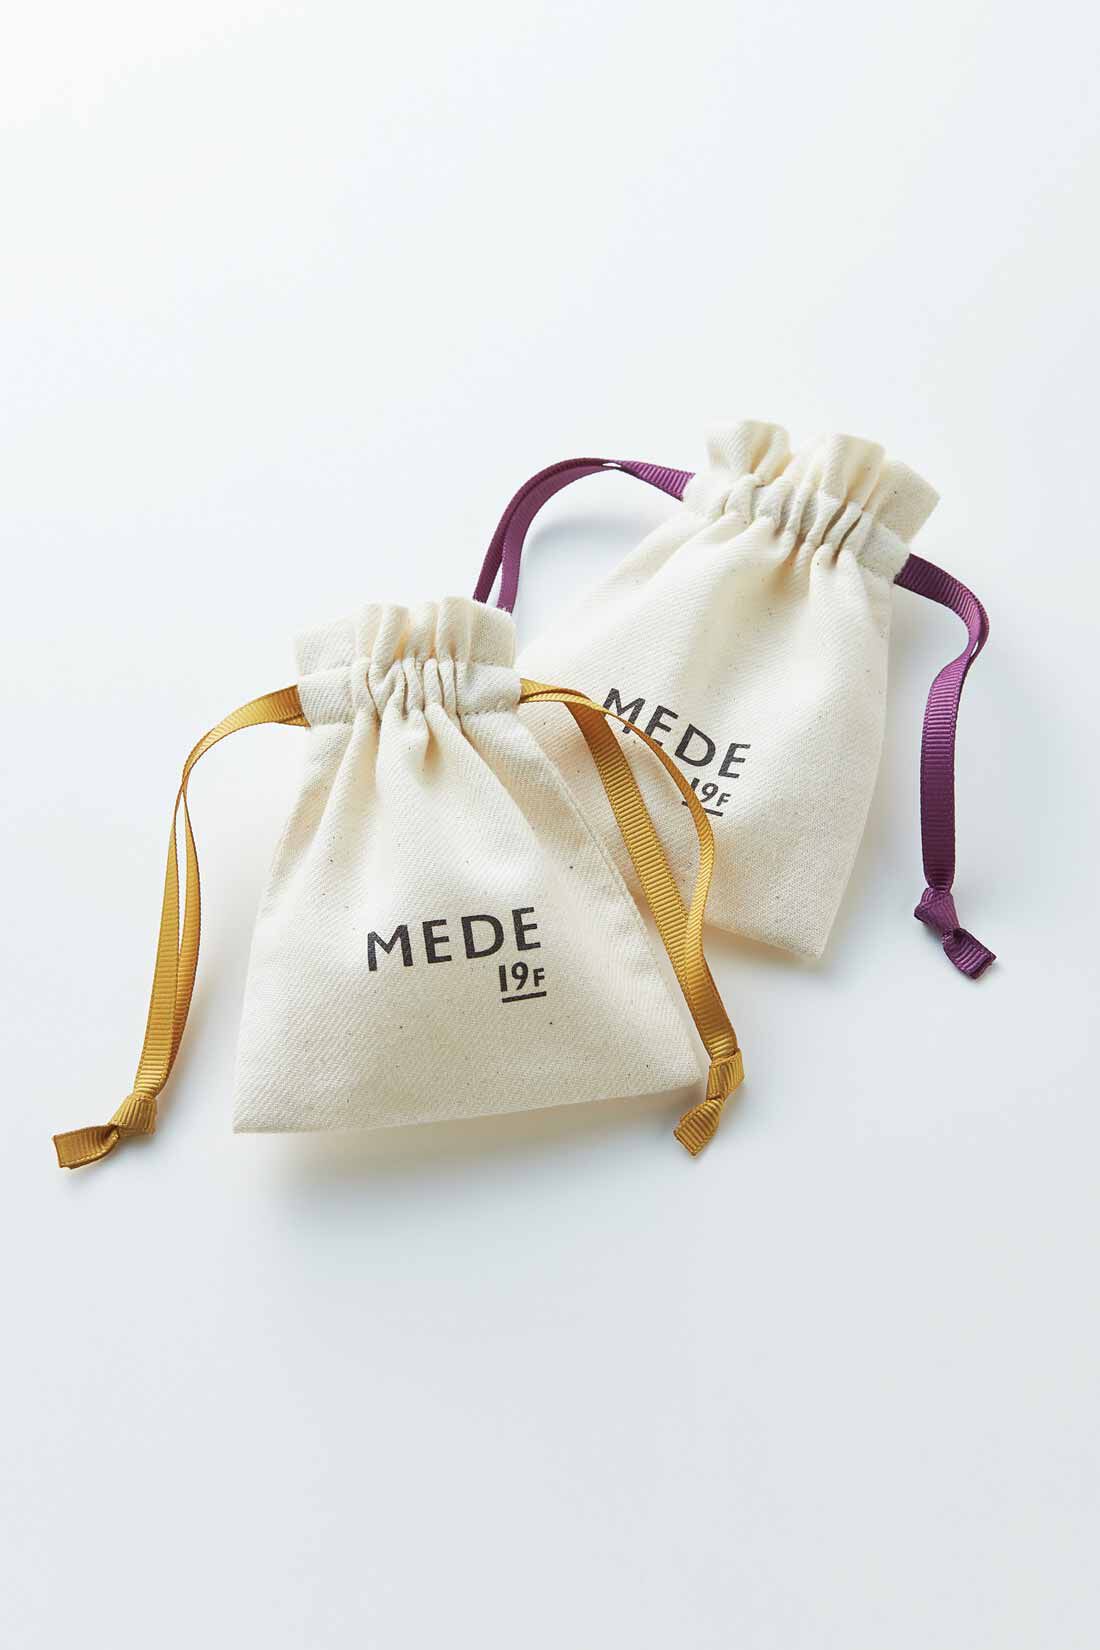 MEDE19F|YPAC for MEDE19F　フランス製陶器ボタンイヤリング type.10|MEDE19Fオリジナルきんちゃくに入れてお届けします。